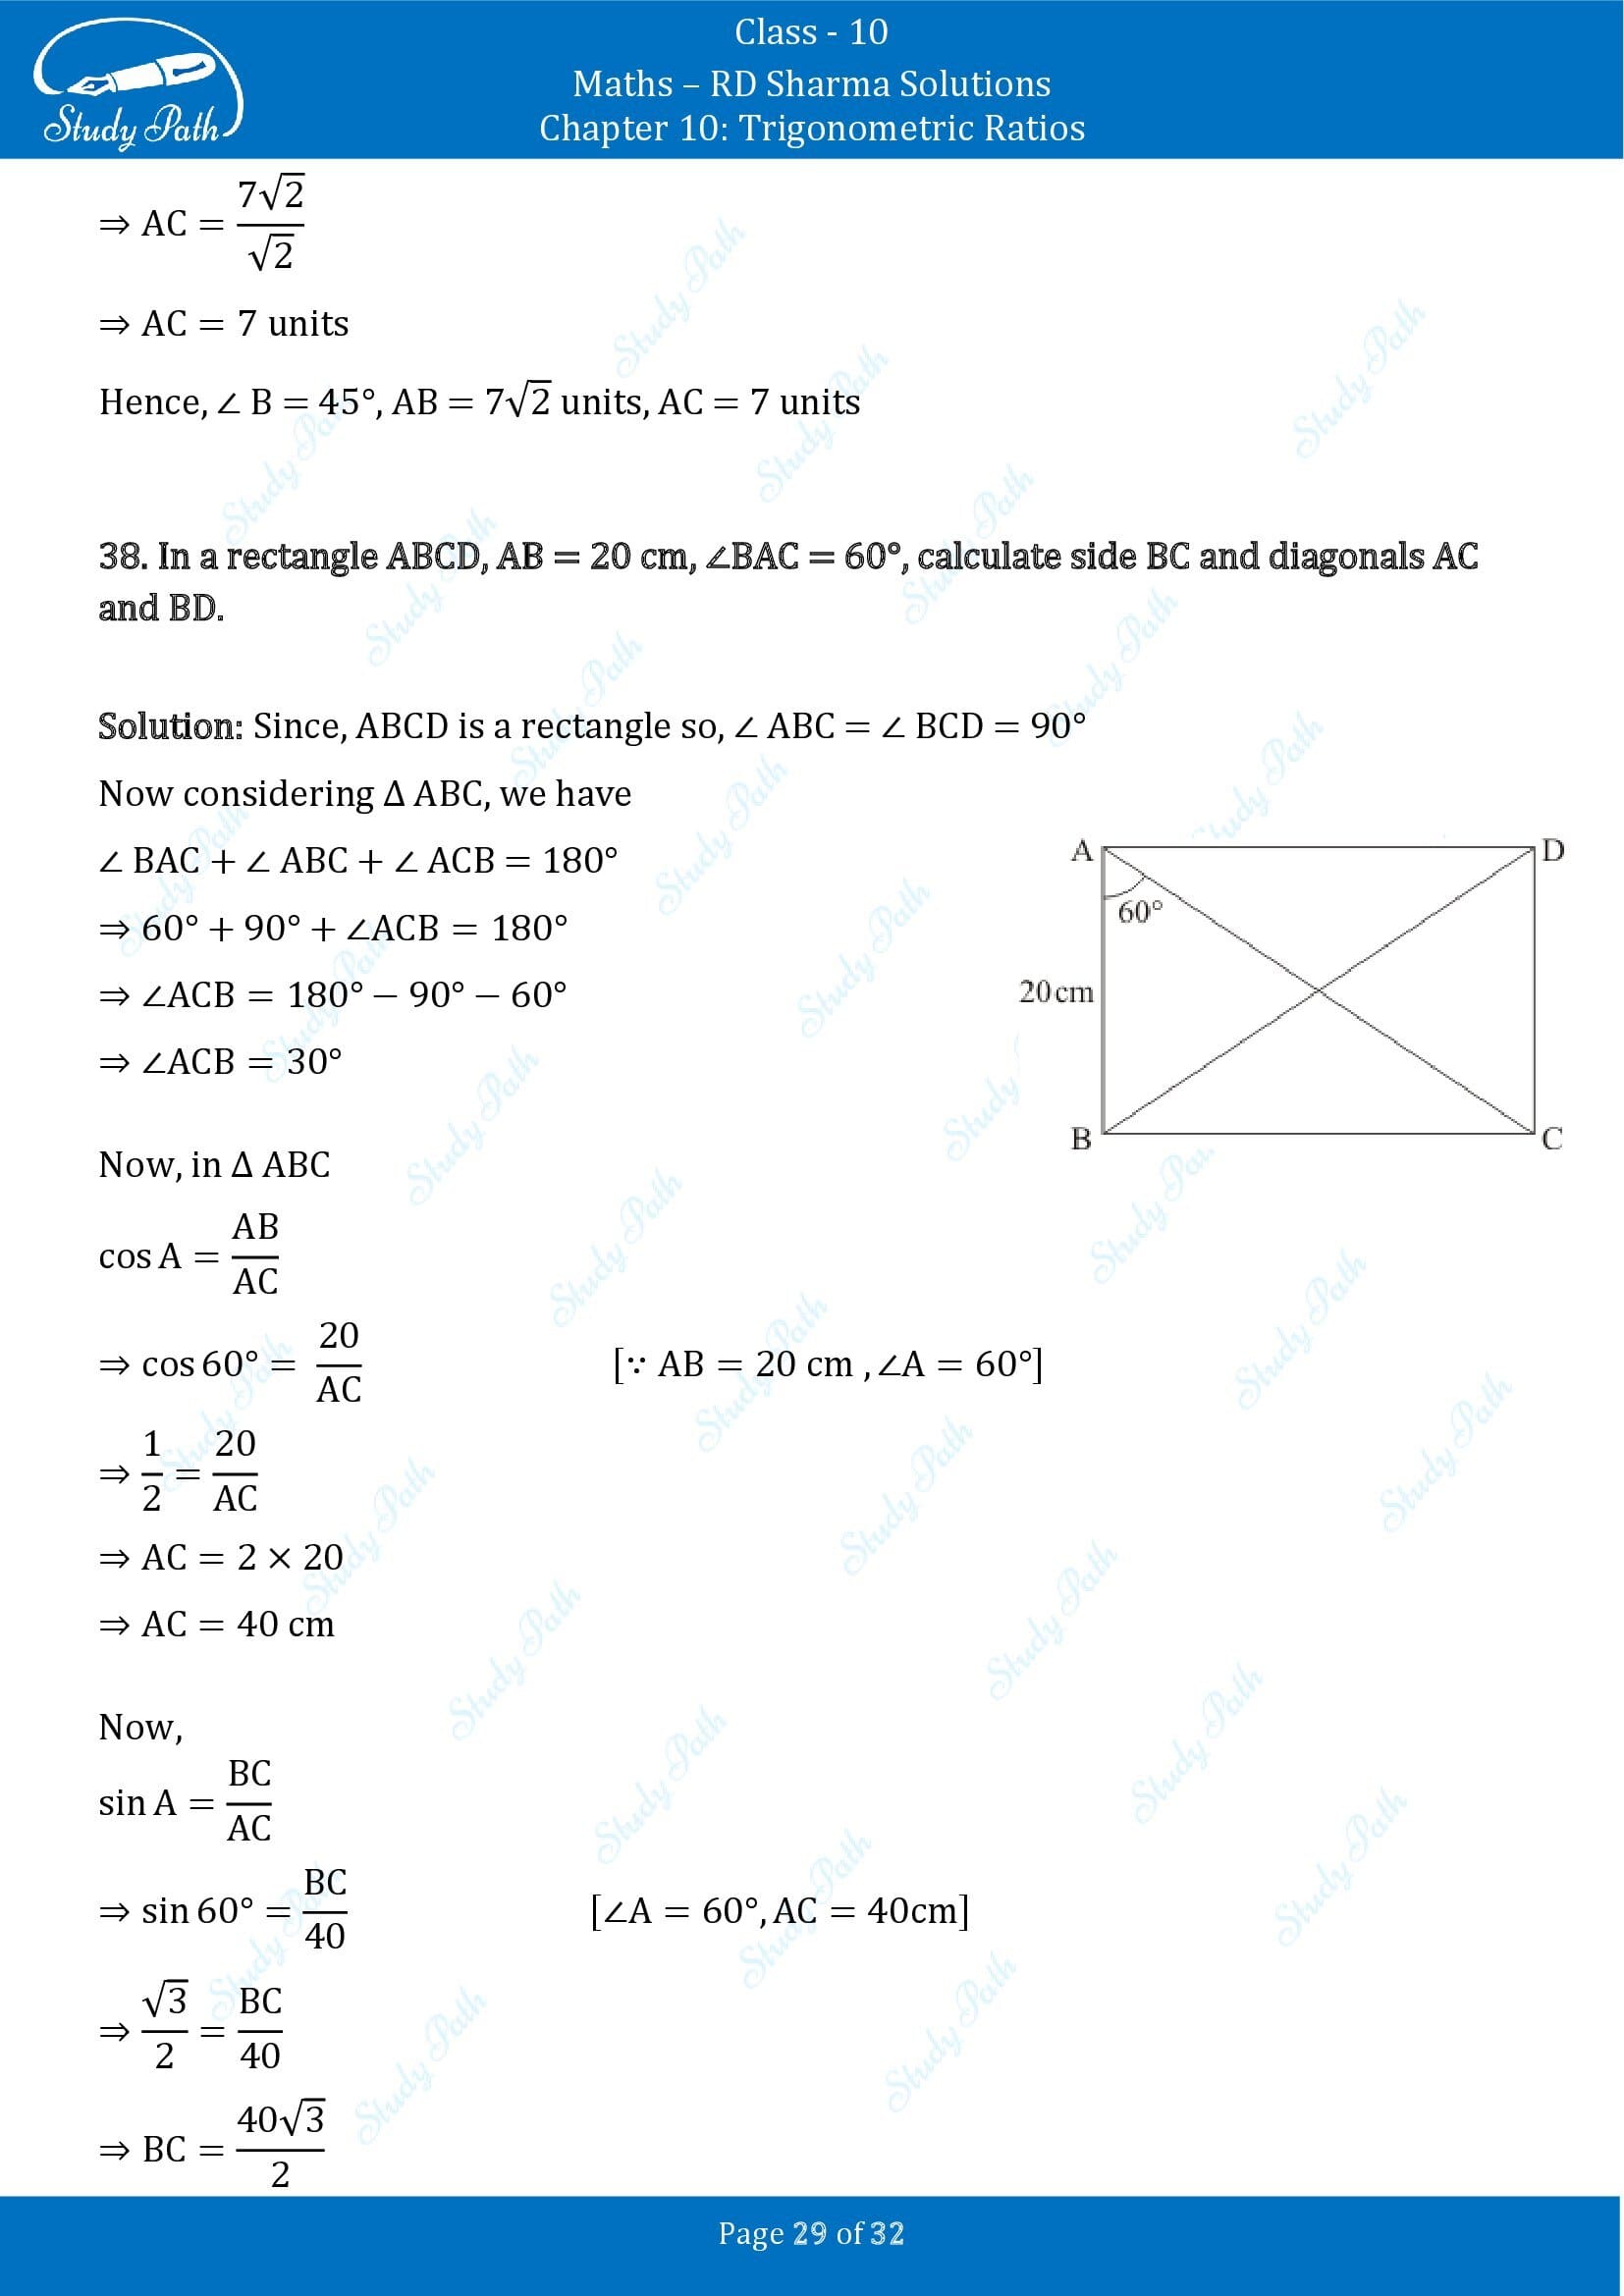 RD Sharma Solutions Class 10 Chapter 10 Trigonometric Ratios Exercise 10.2 00029